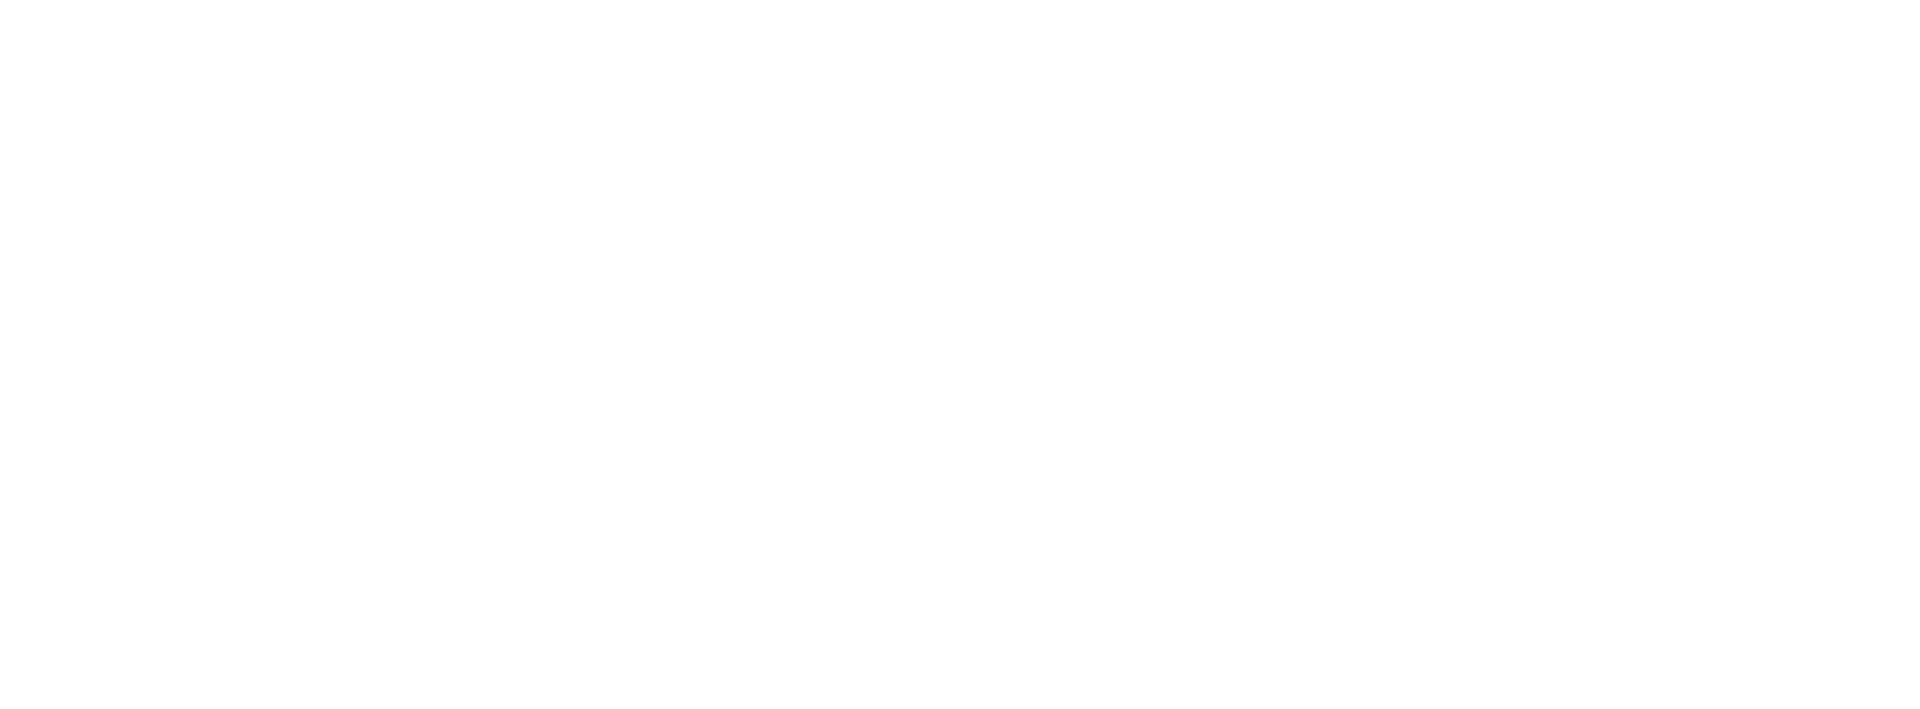 reland homes logo white